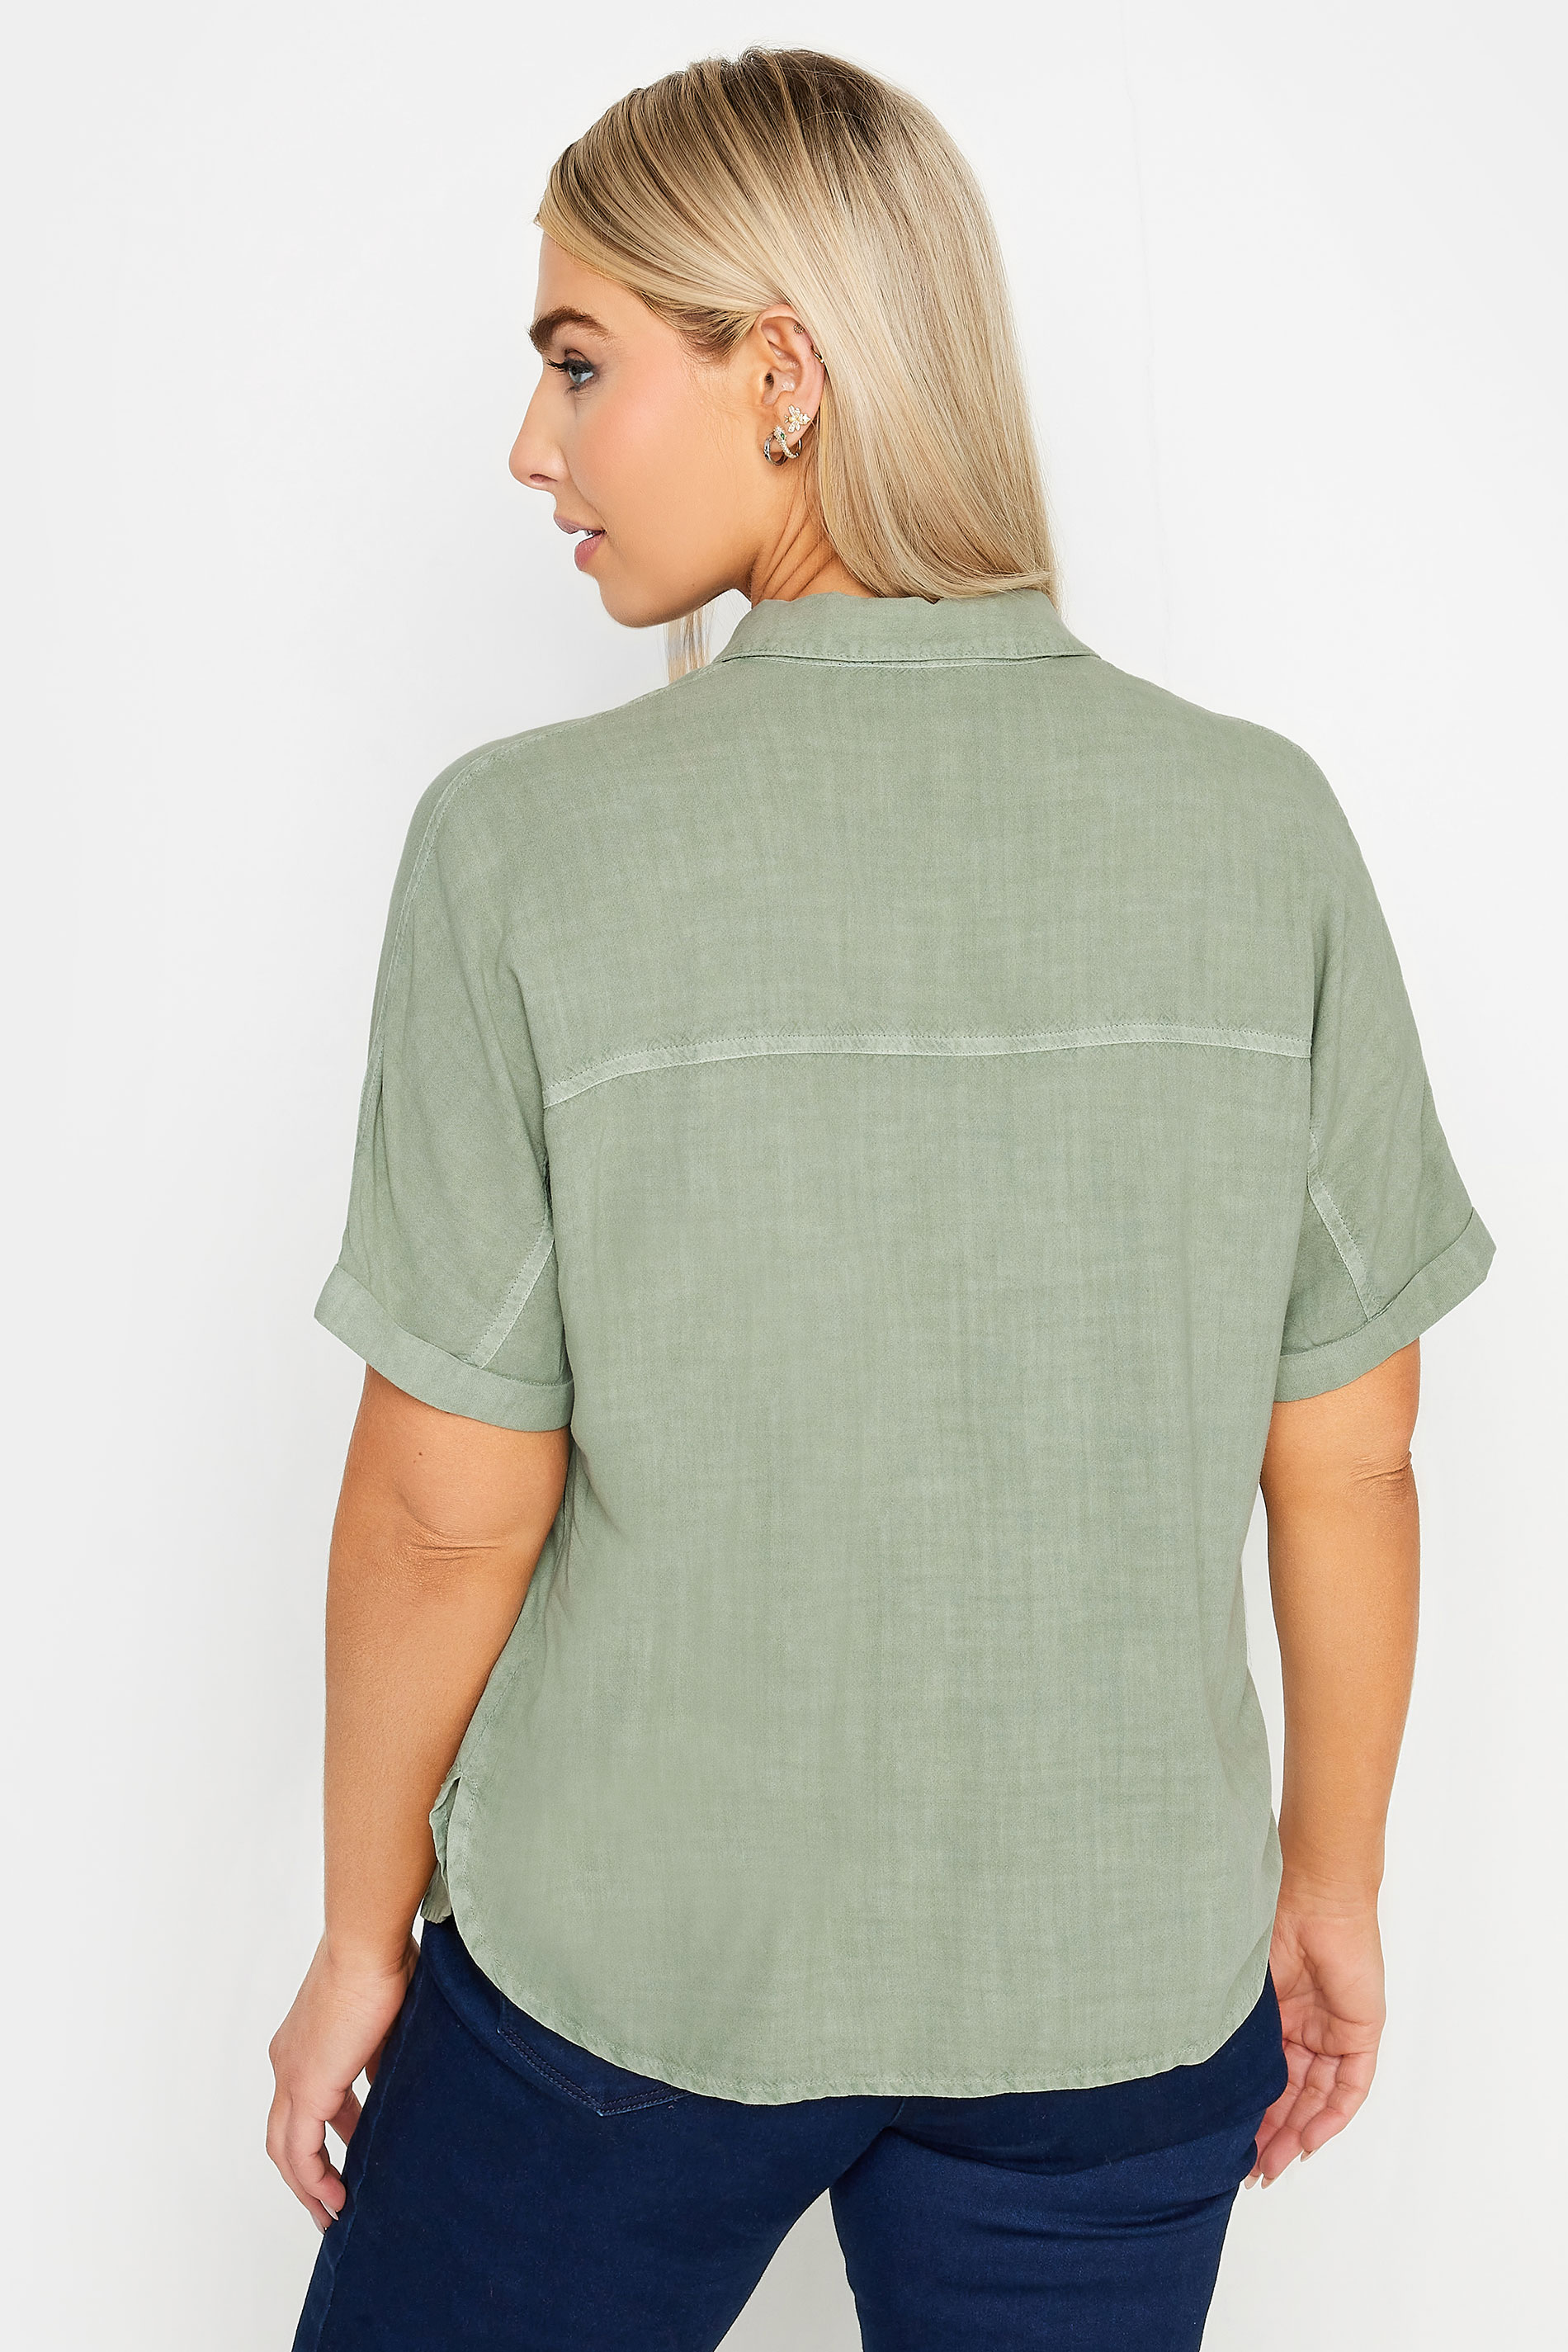 M&Co Sage Green Short Sleeve Shirt | M&Co 3